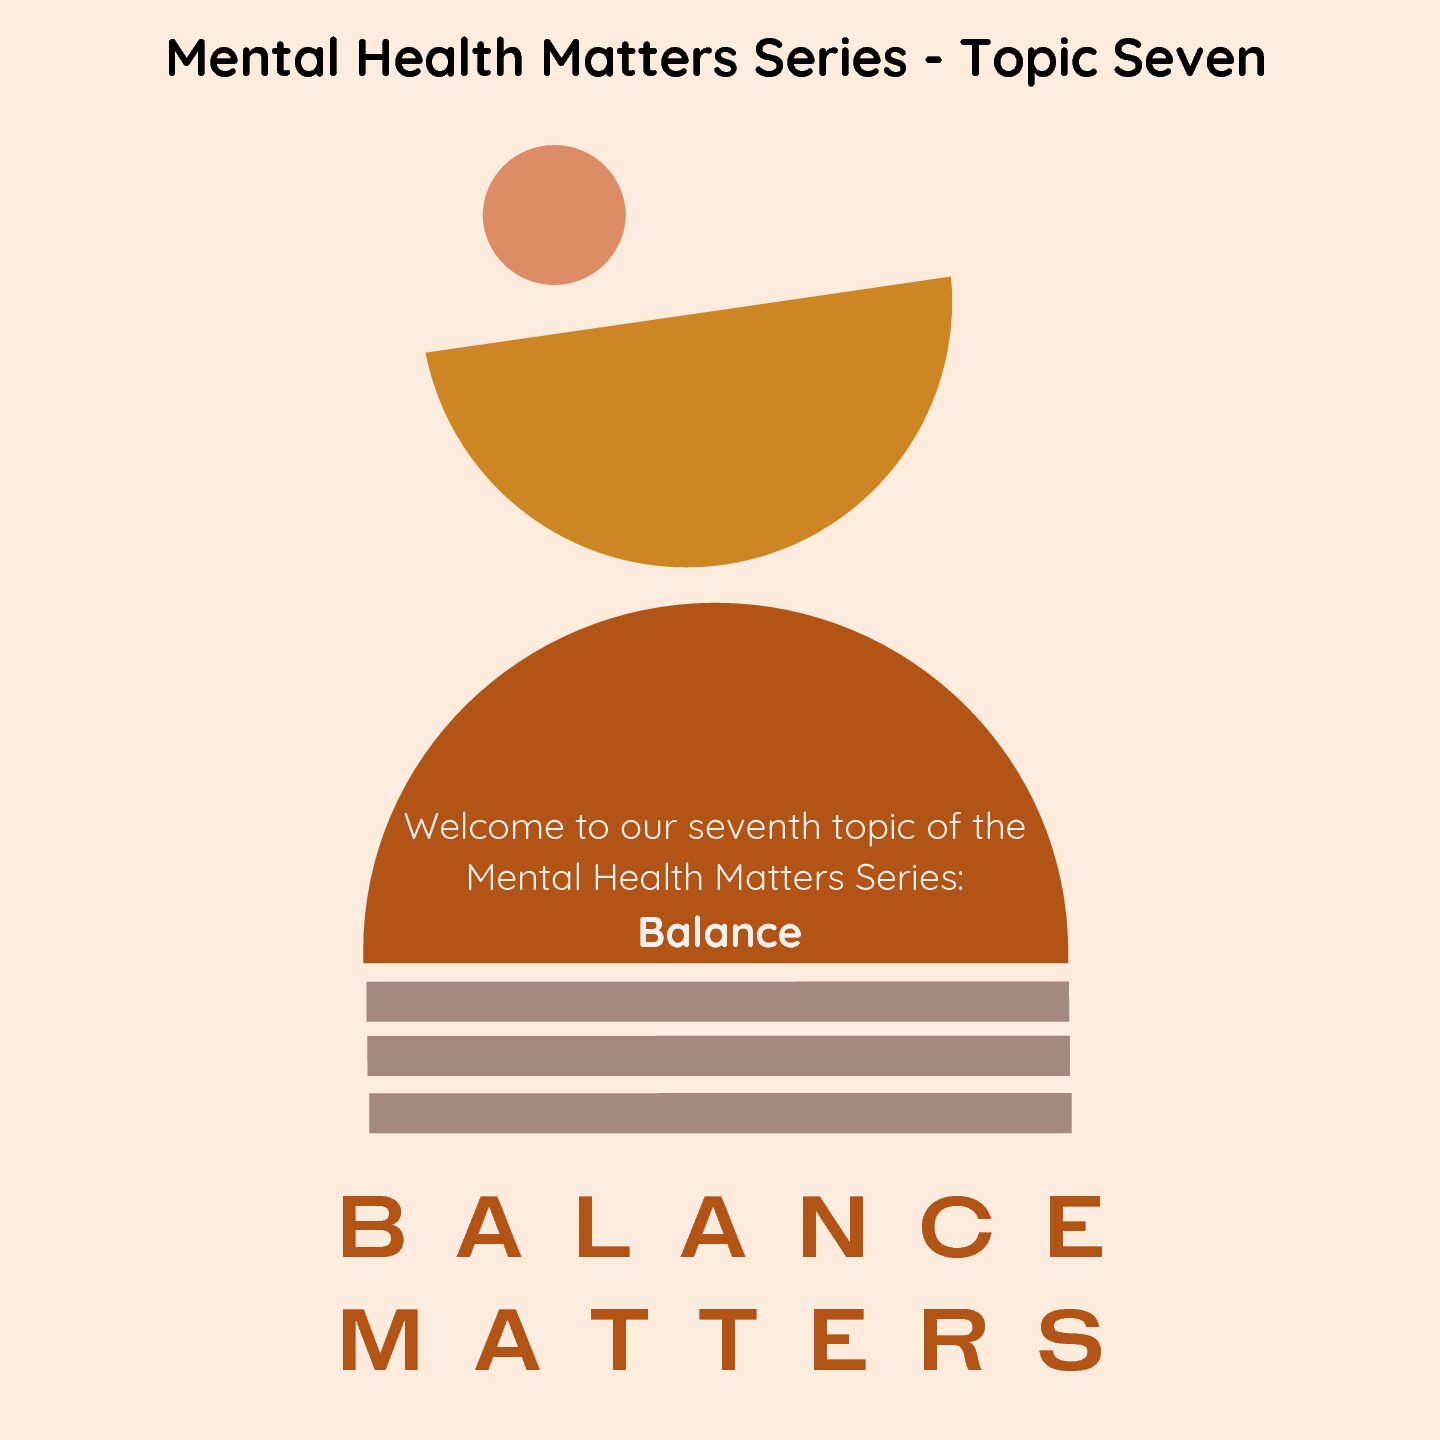 Mental Health Matters Series: Balance Matters